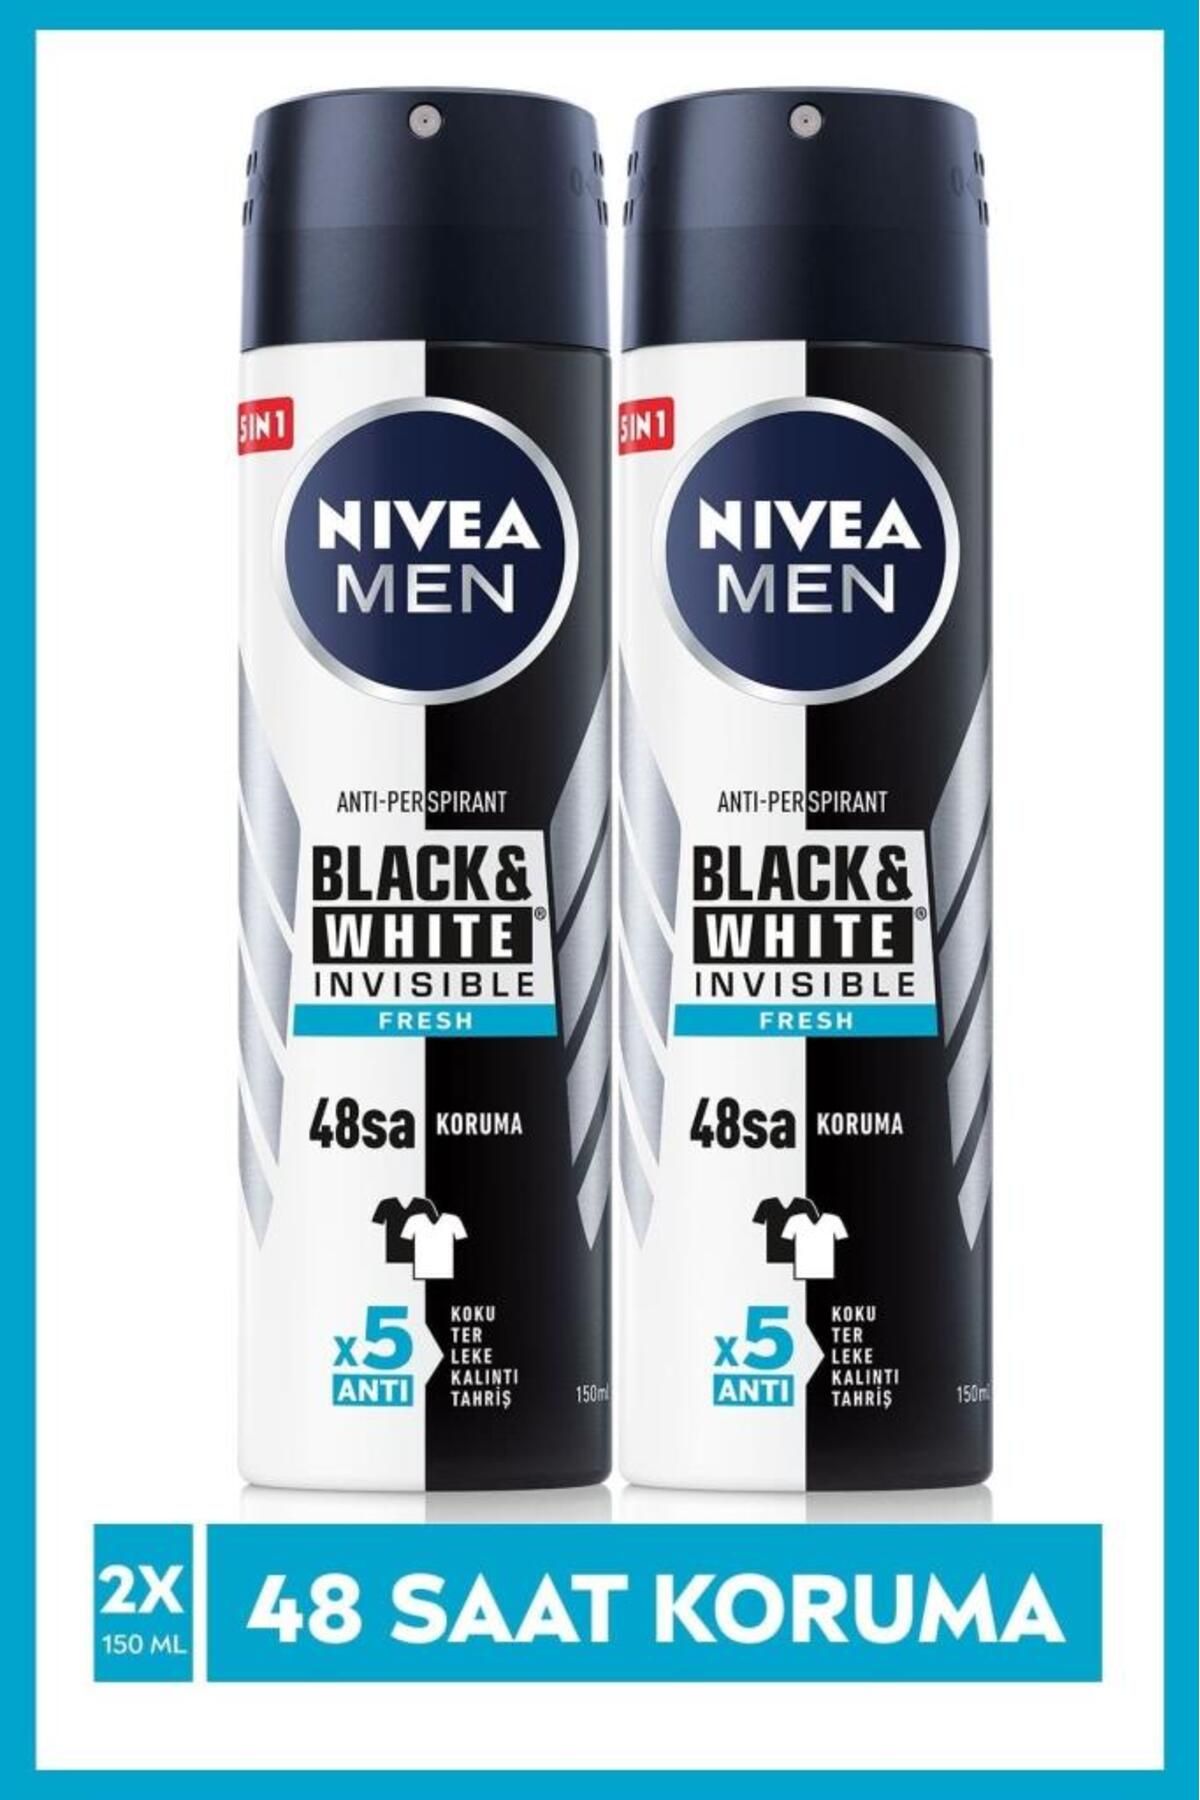 NIVEA MEN Erkek Sprey Deodorant Invisible Black&White Fresh 150mlx2Adet, 48 Saat Anti-Perspirant Koruma